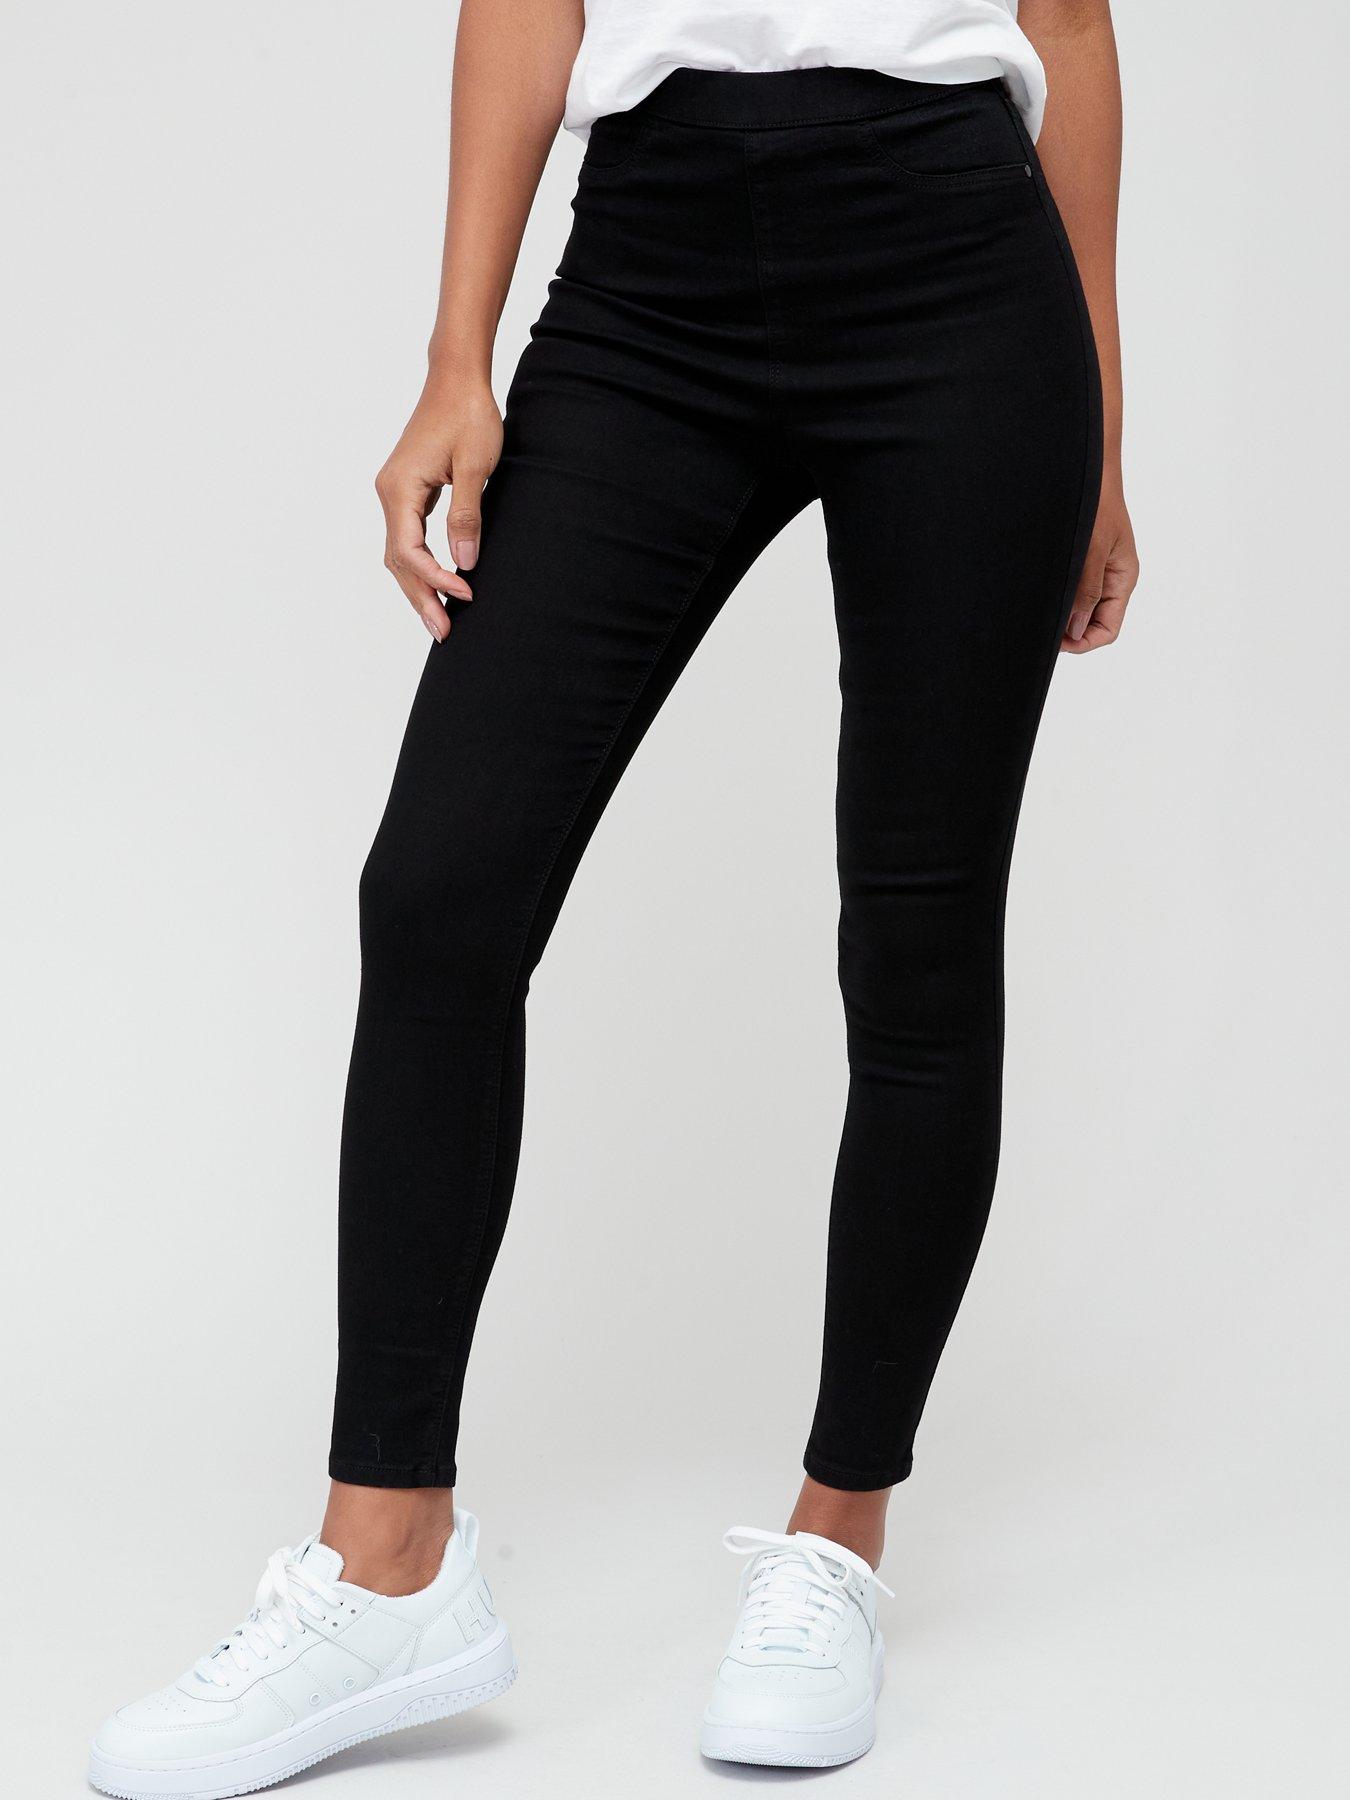 HUE, Pants & Jumpsuits, Hue Capri Leggings Black Size Small Euc